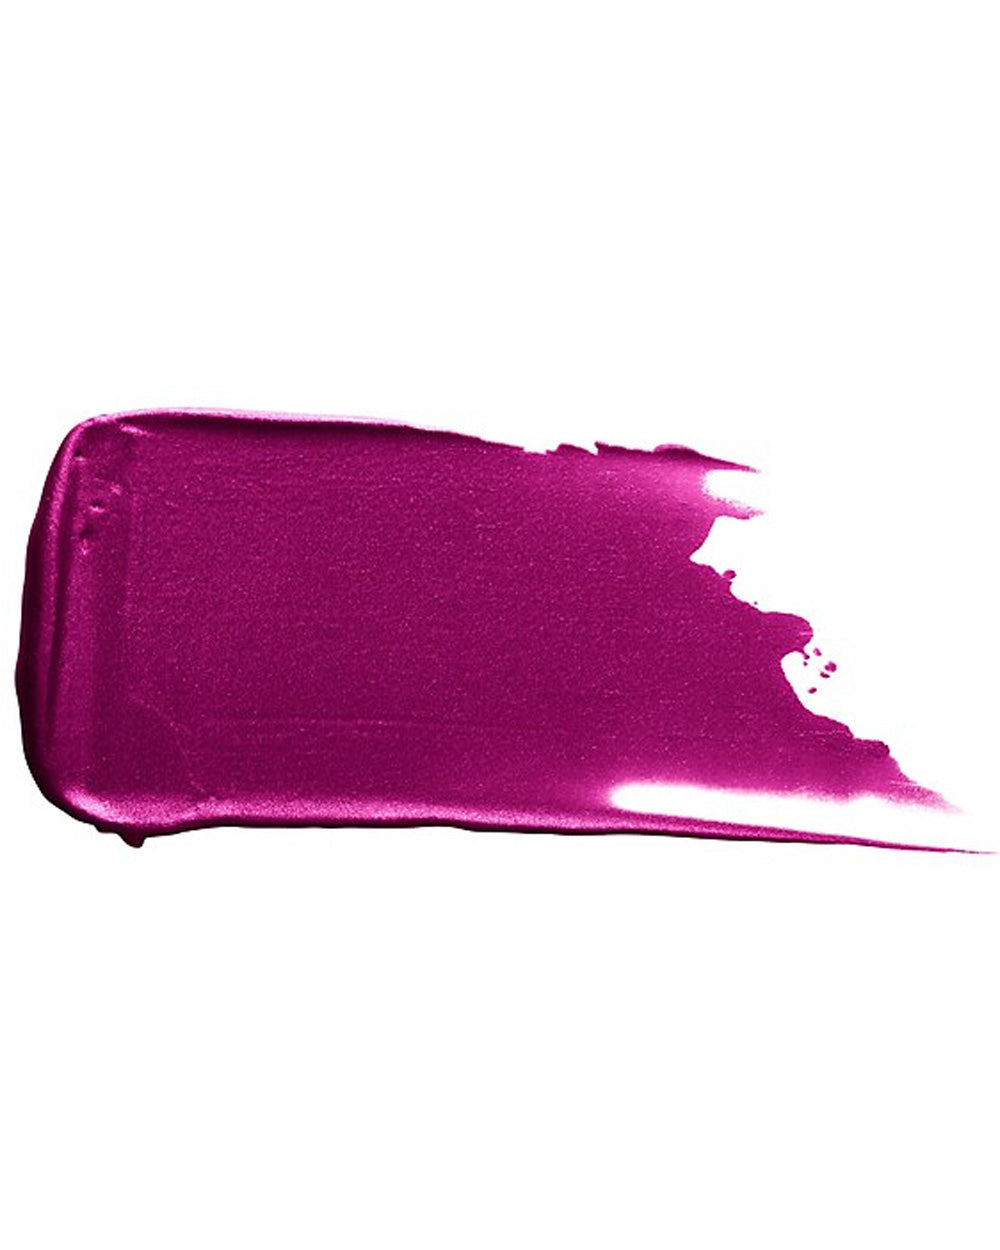 Paint Wash Liquid Lip Color in Fuchsia Mauve